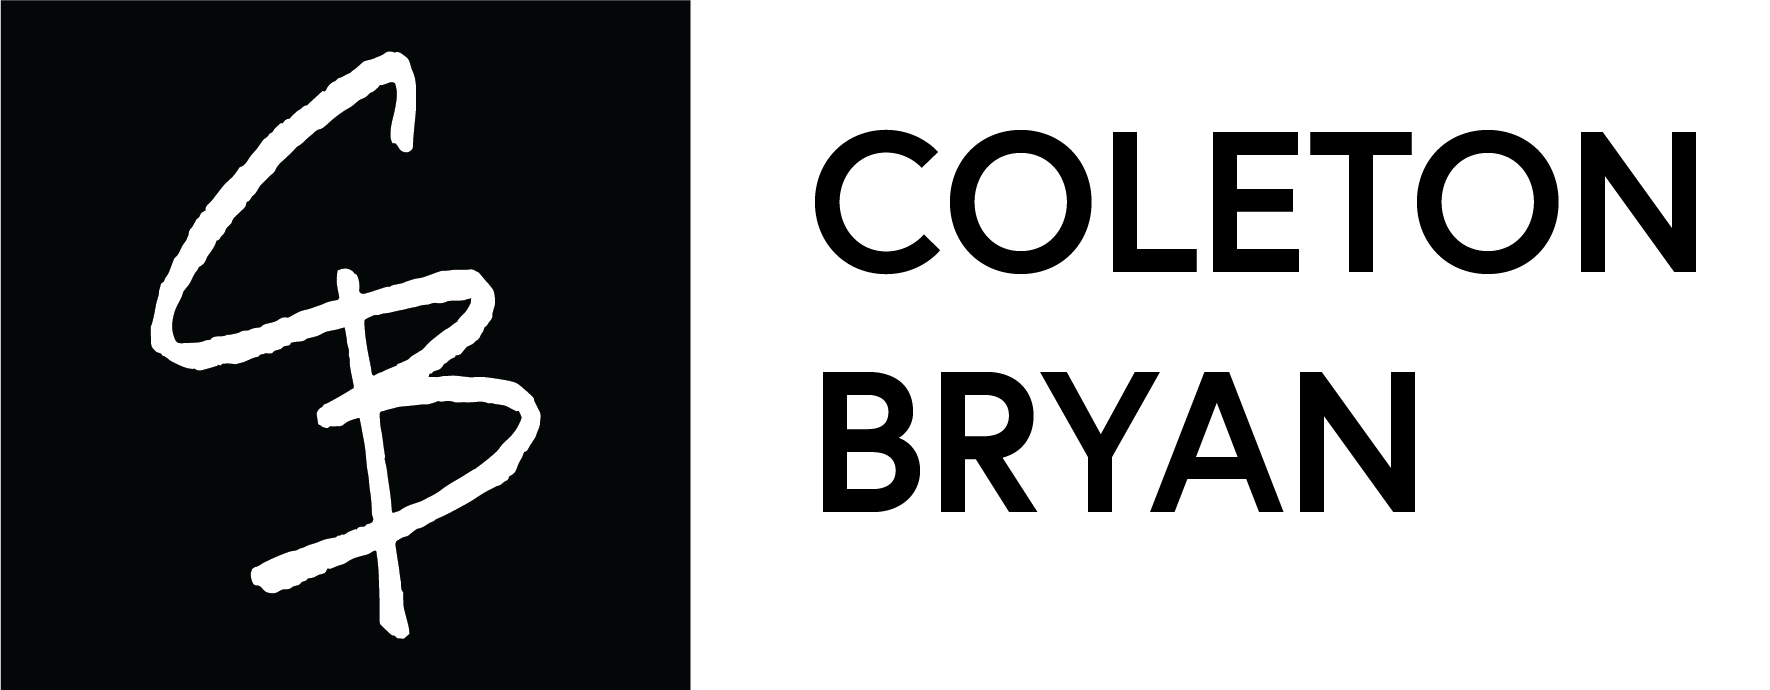 Coleton Bryan